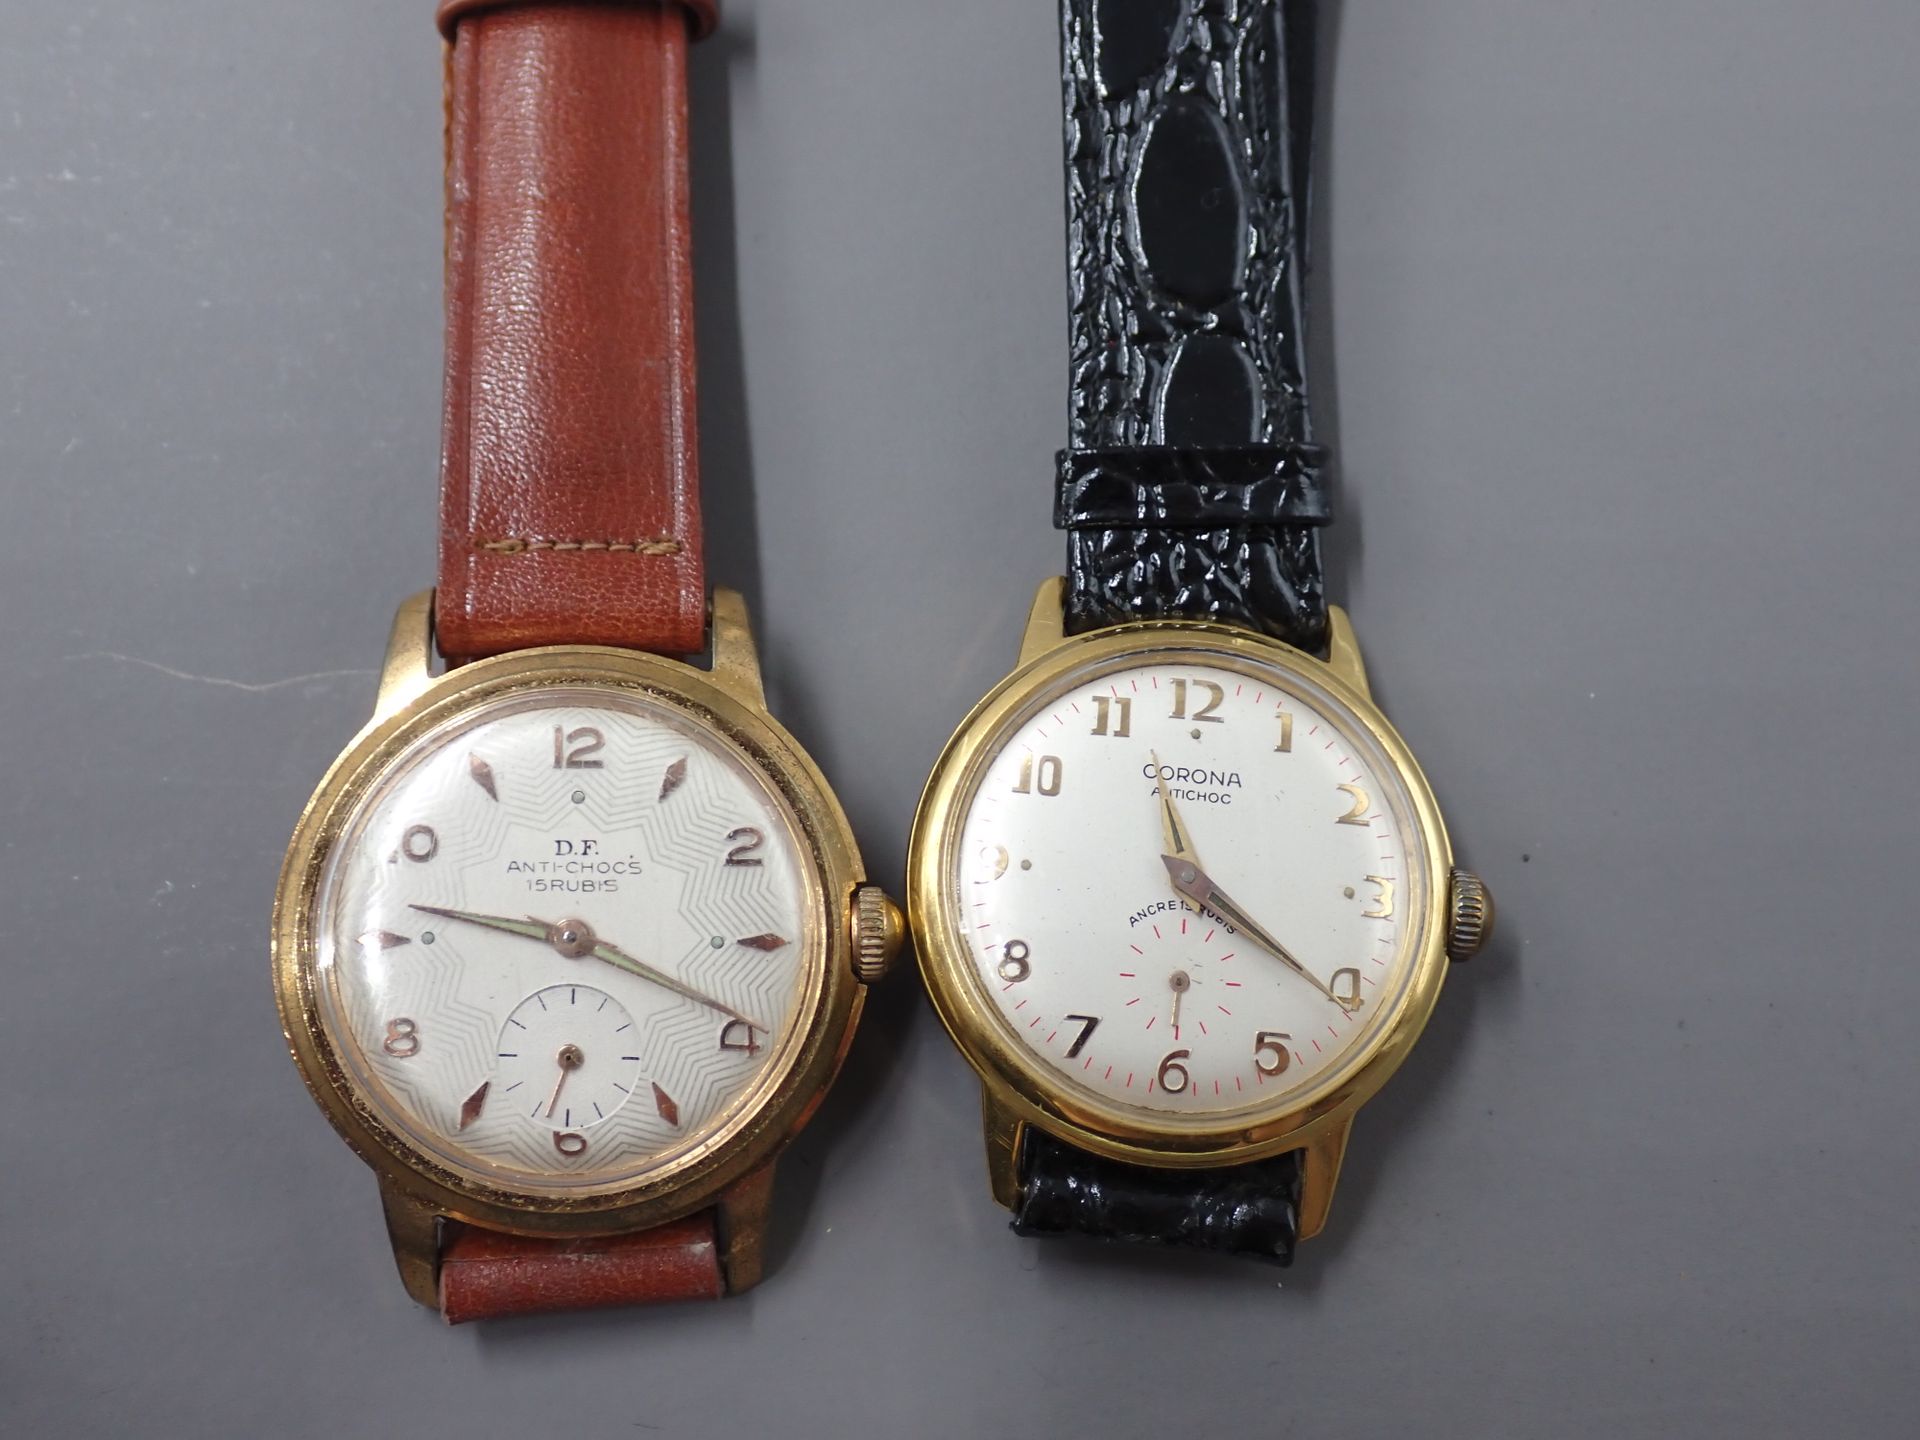 VF et CORONA 2 men's watches, mechanical movements